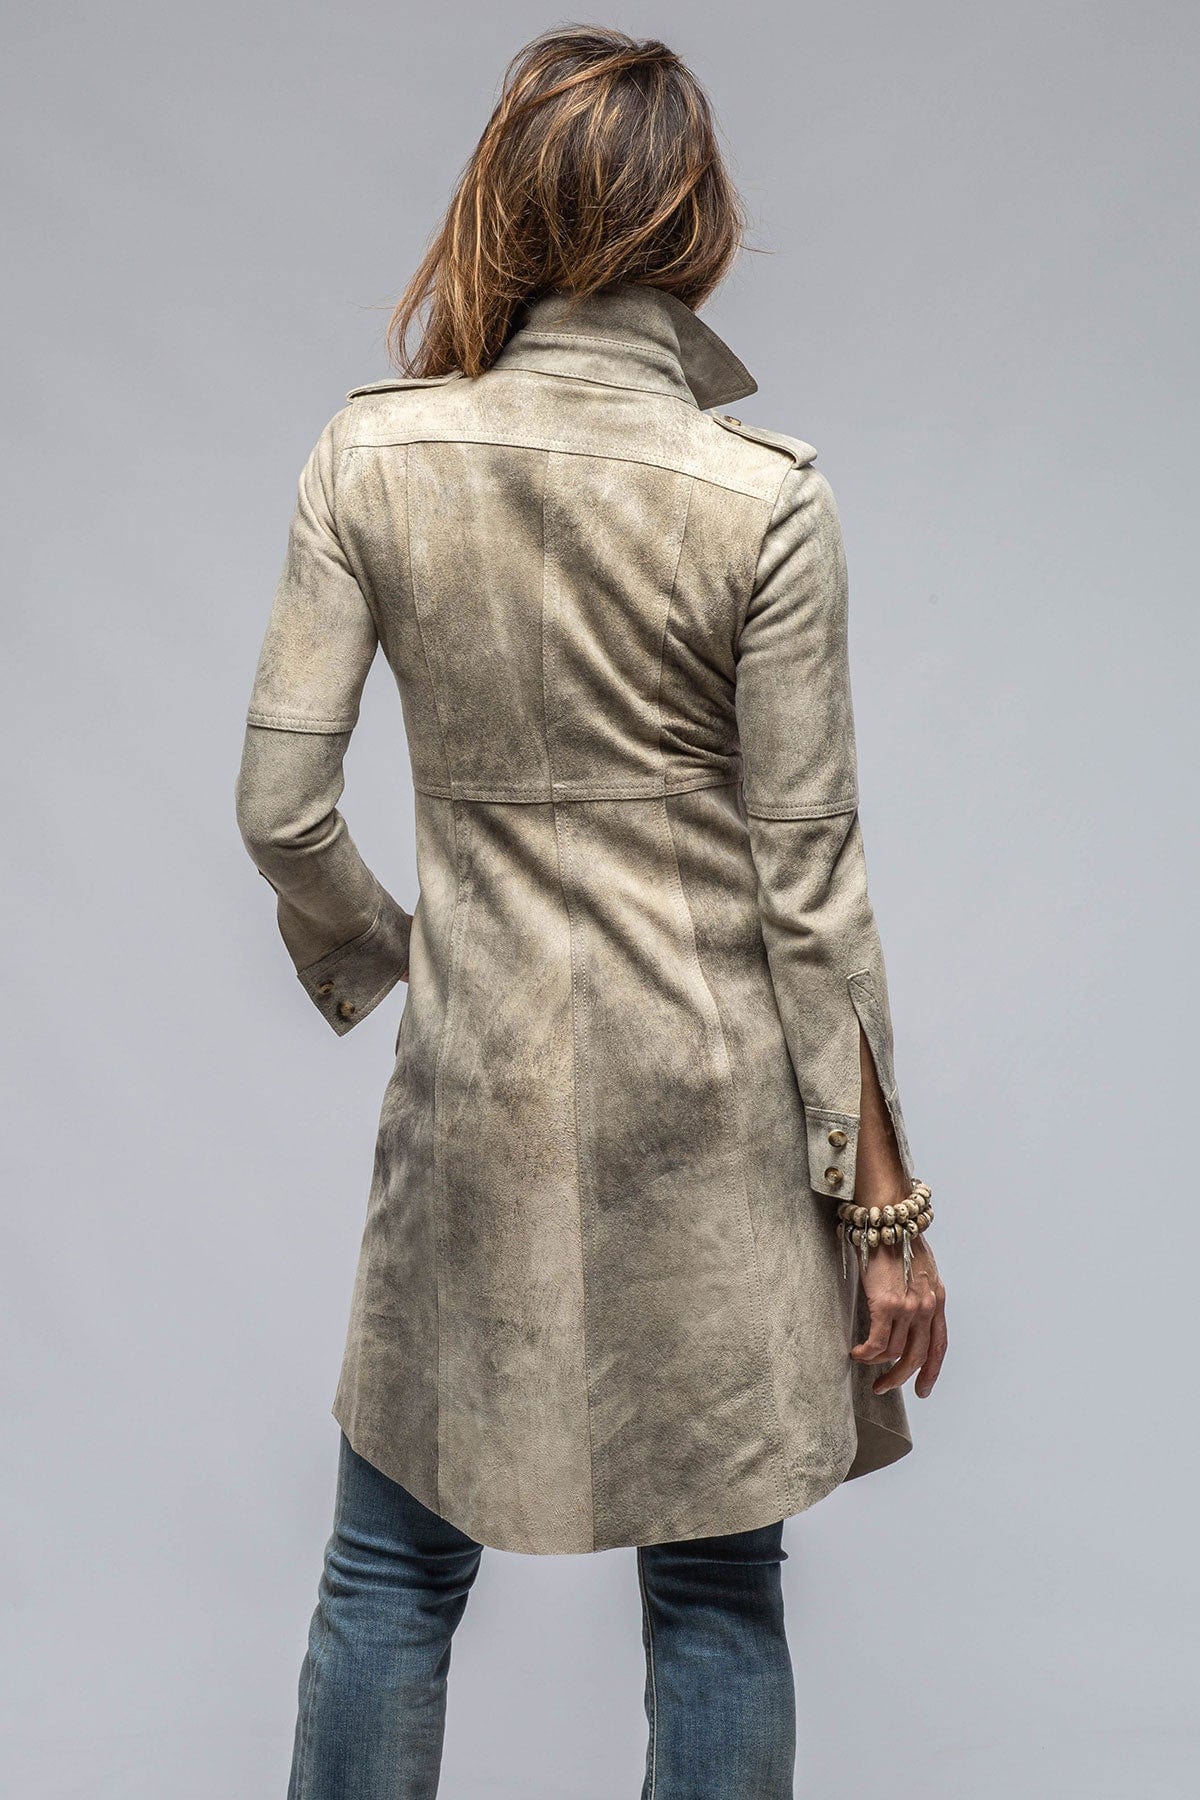 Savannah Long Leather Shirt/Dress in Dress - AXEL'S